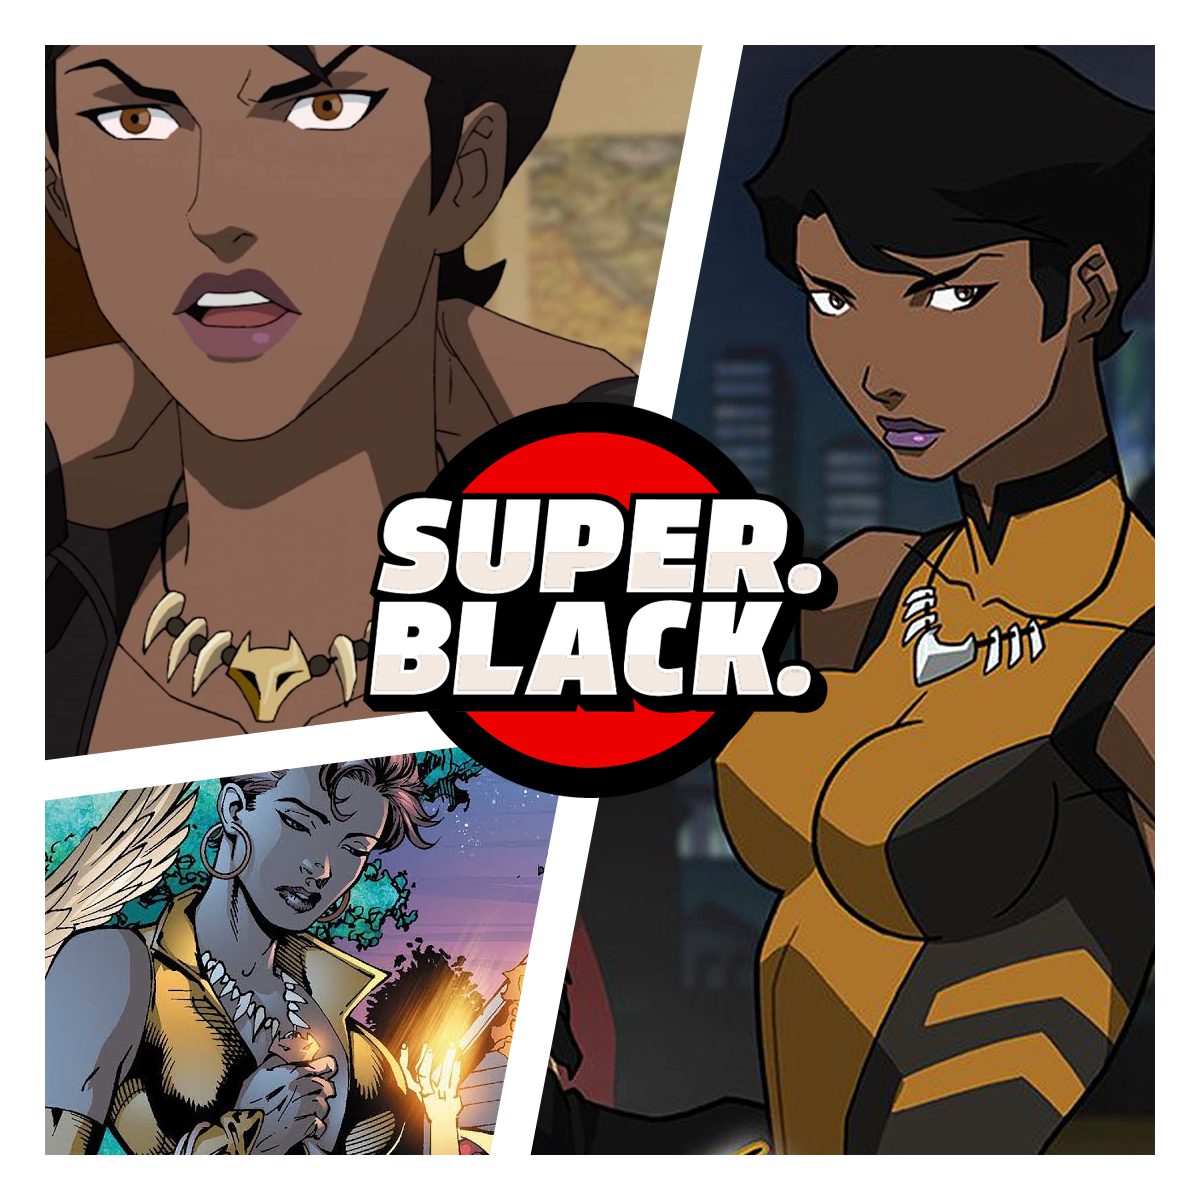 Vixen flaunts her animal side in this episode of Super. Black.